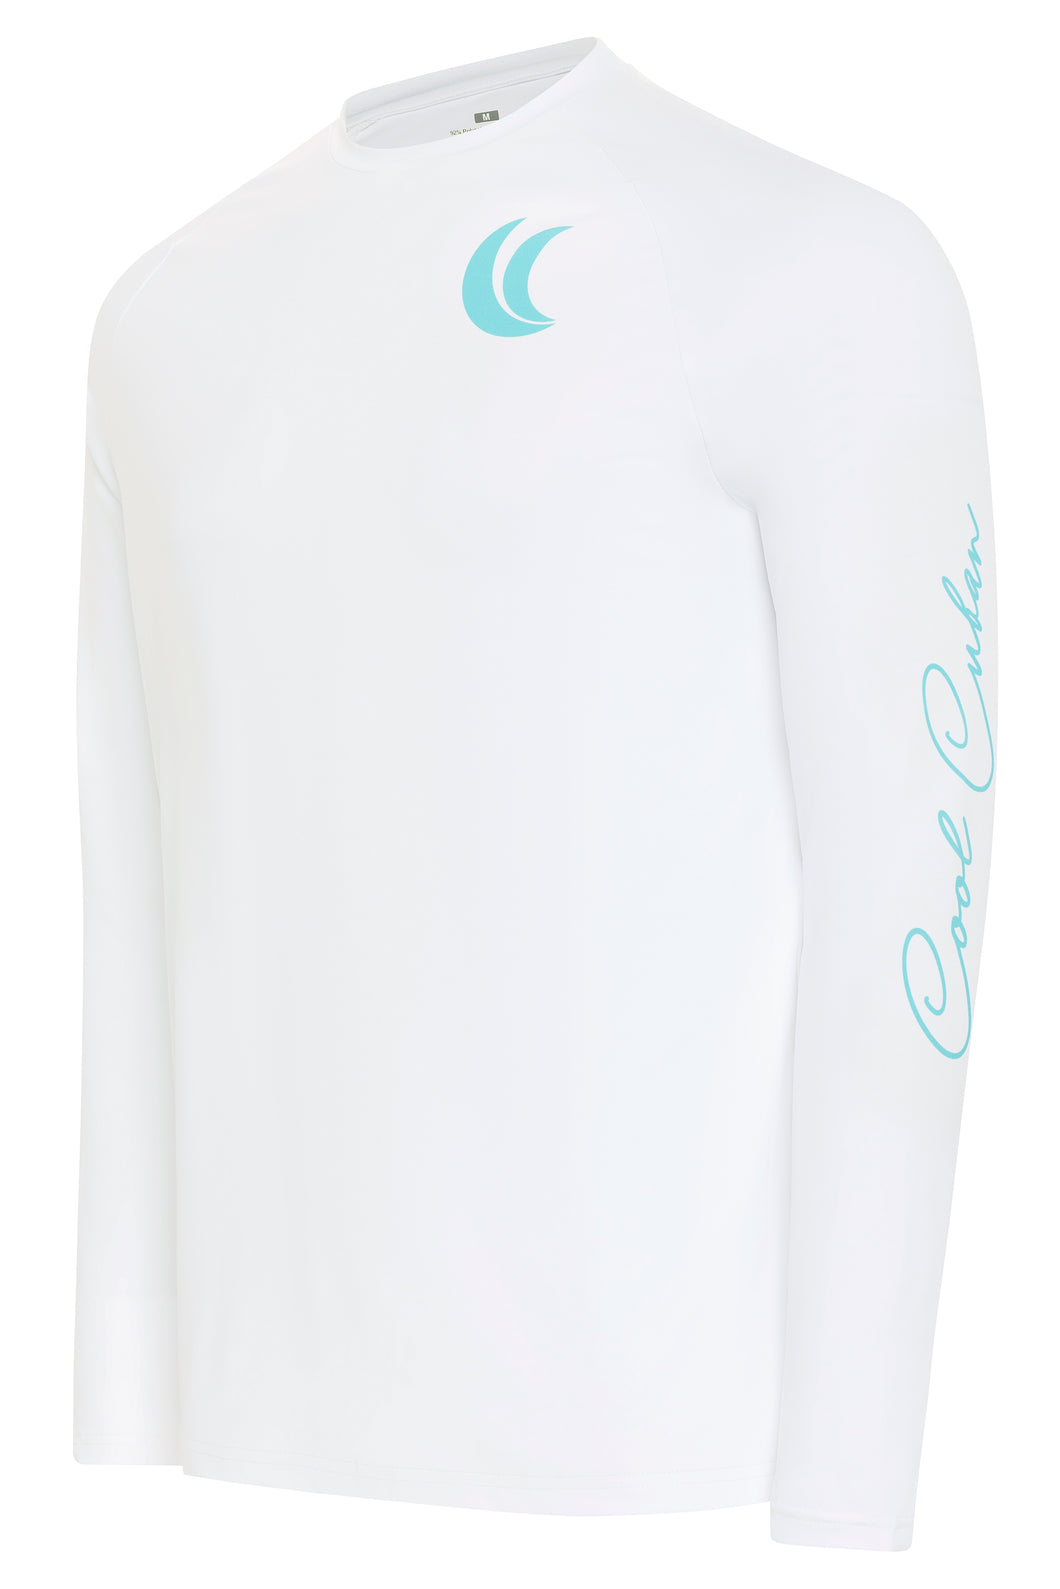 Fishing shirt White with SeaFoam logo crew neck shirt